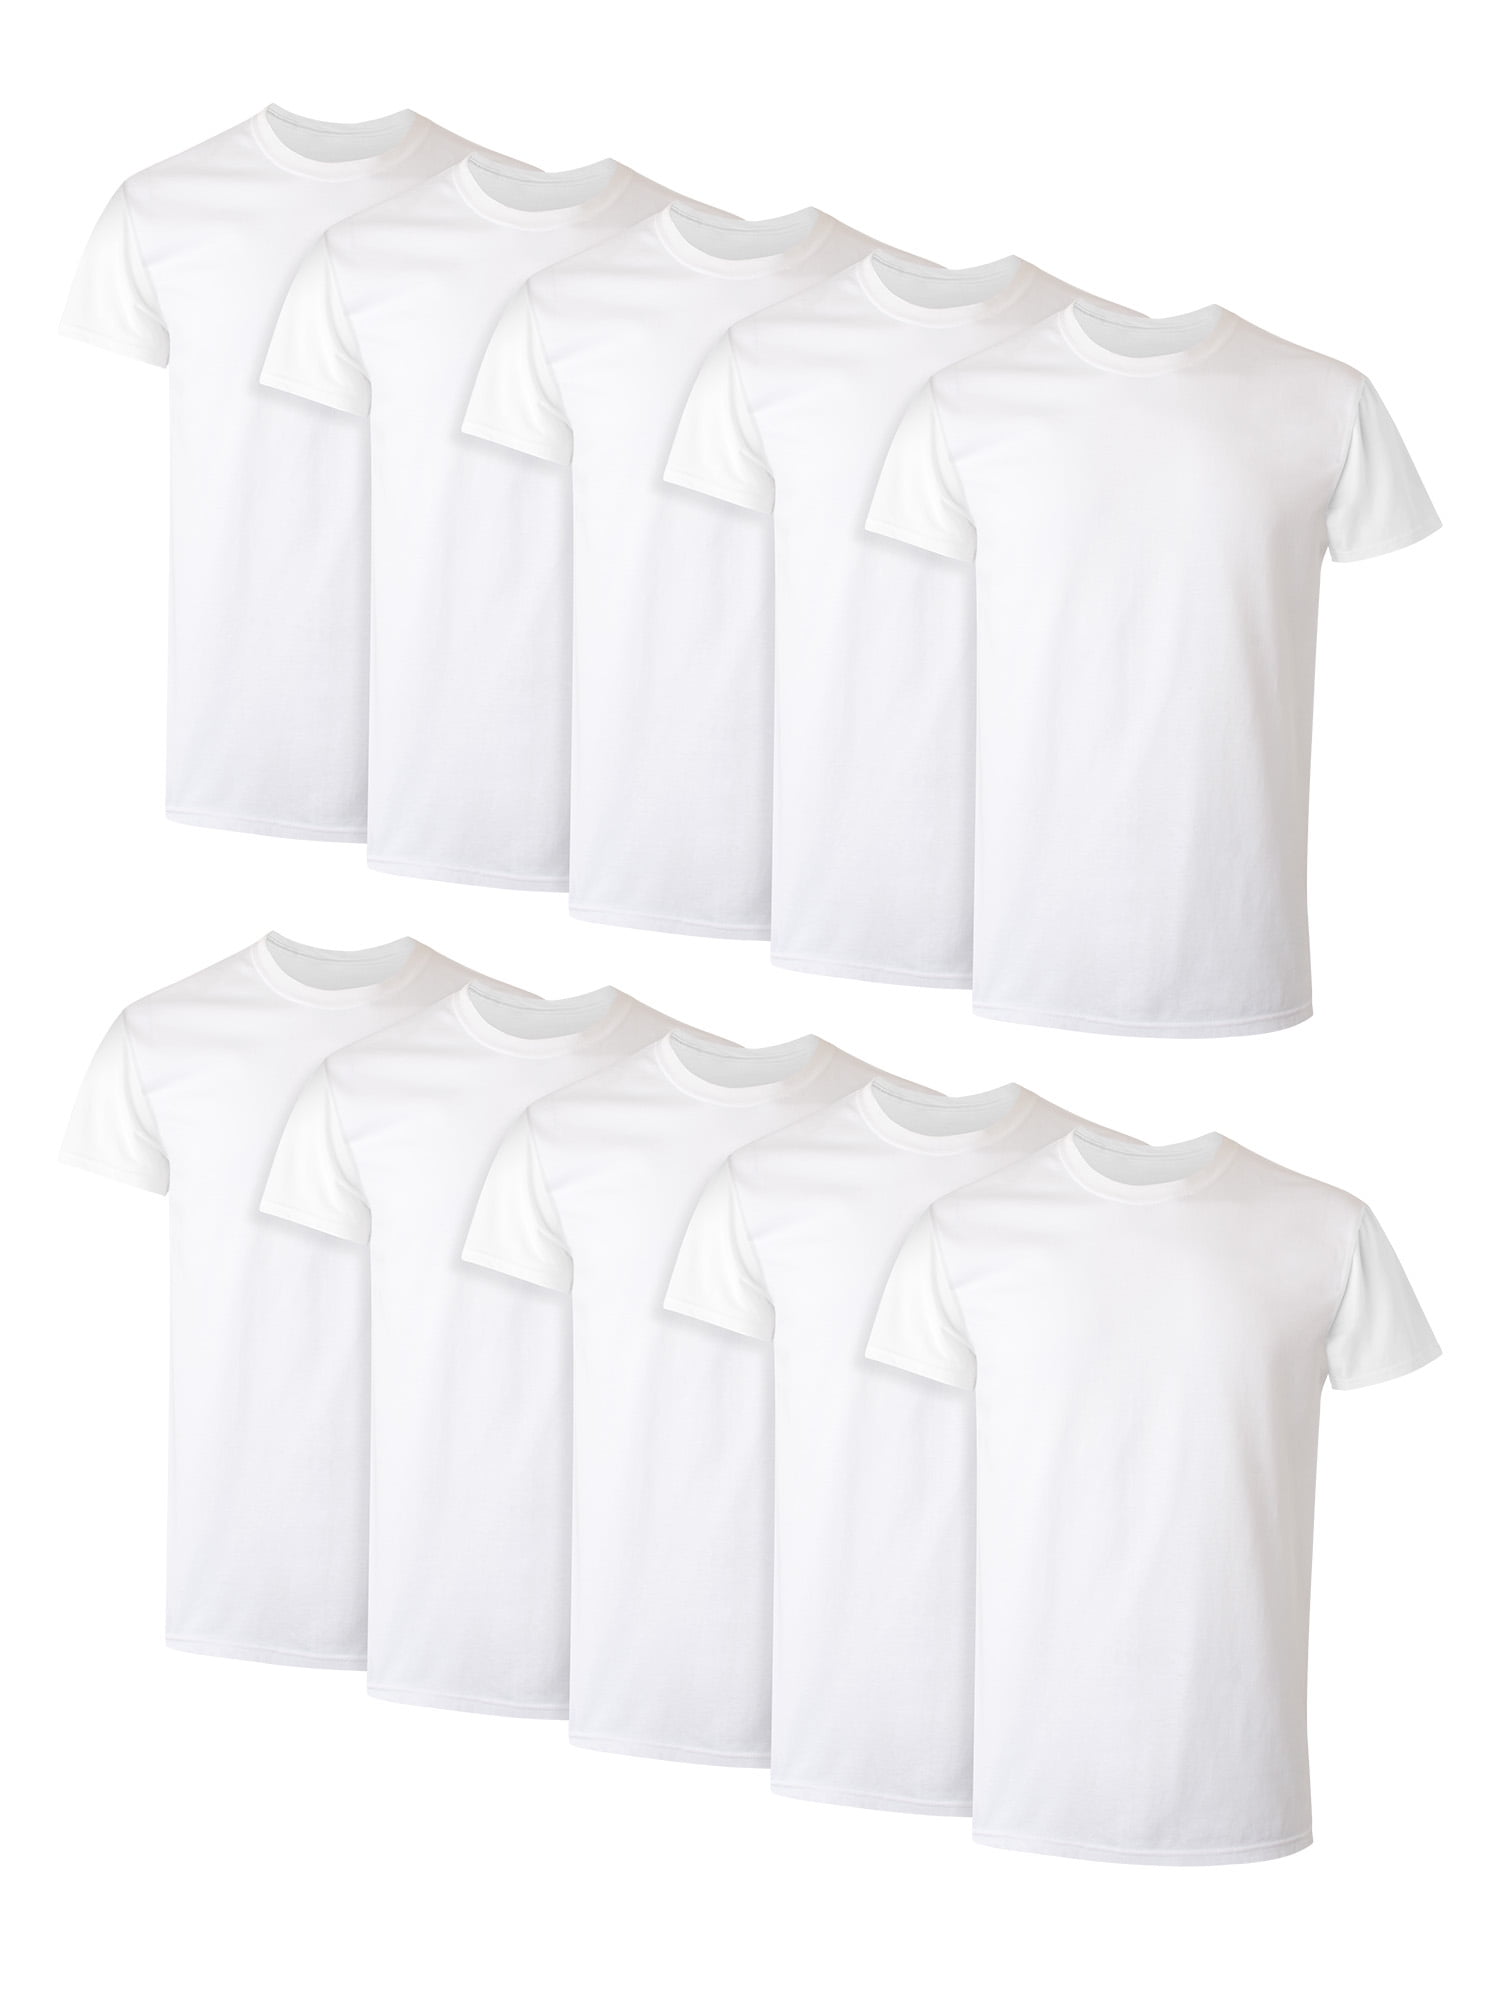 Hanes Men's Super Value Pack White Crew T-Shirt Undershirts, 10